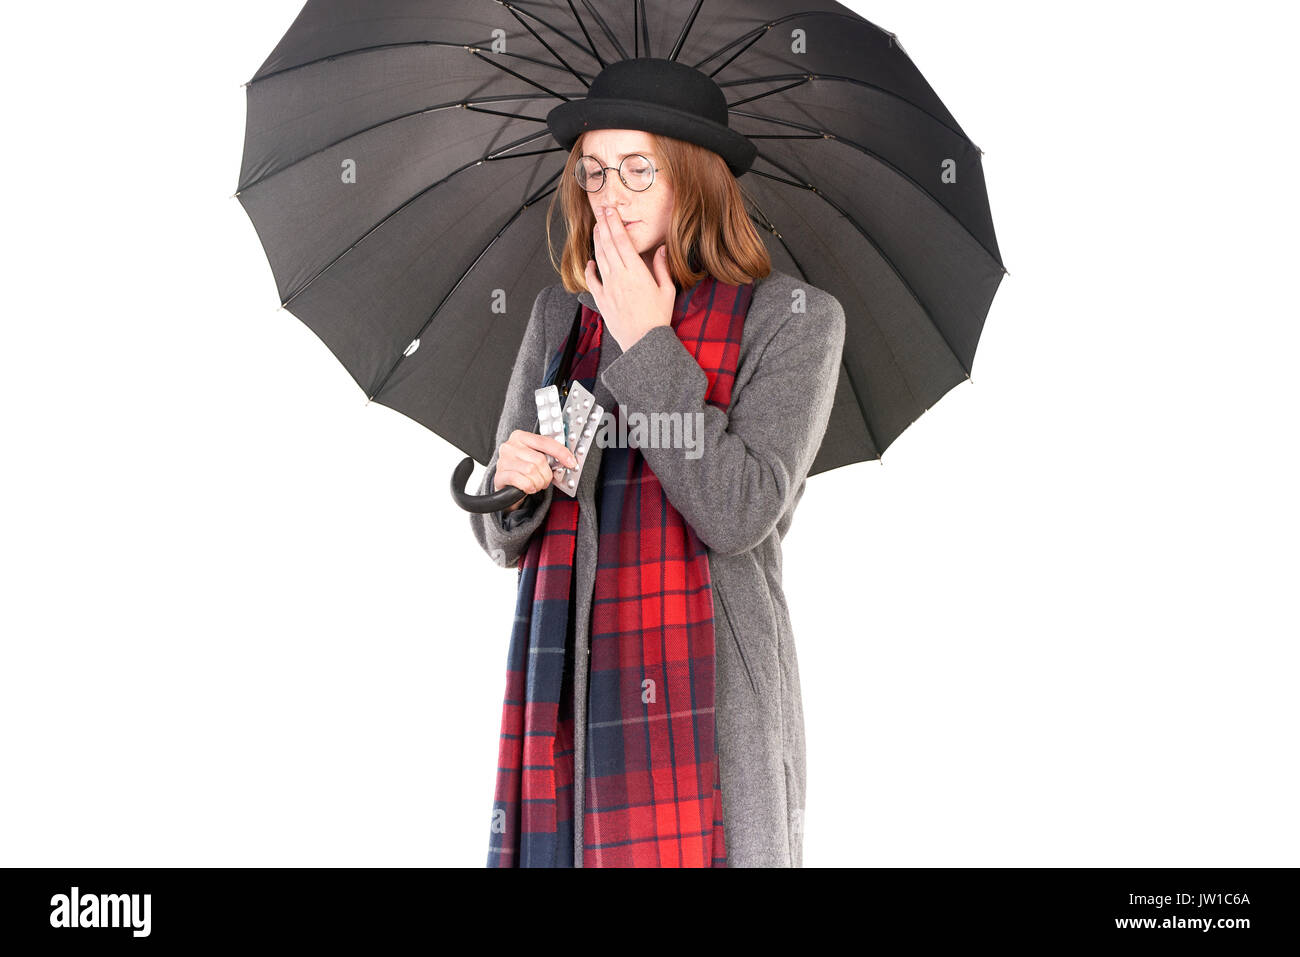 Hispter girl under umbrella Stock Photo